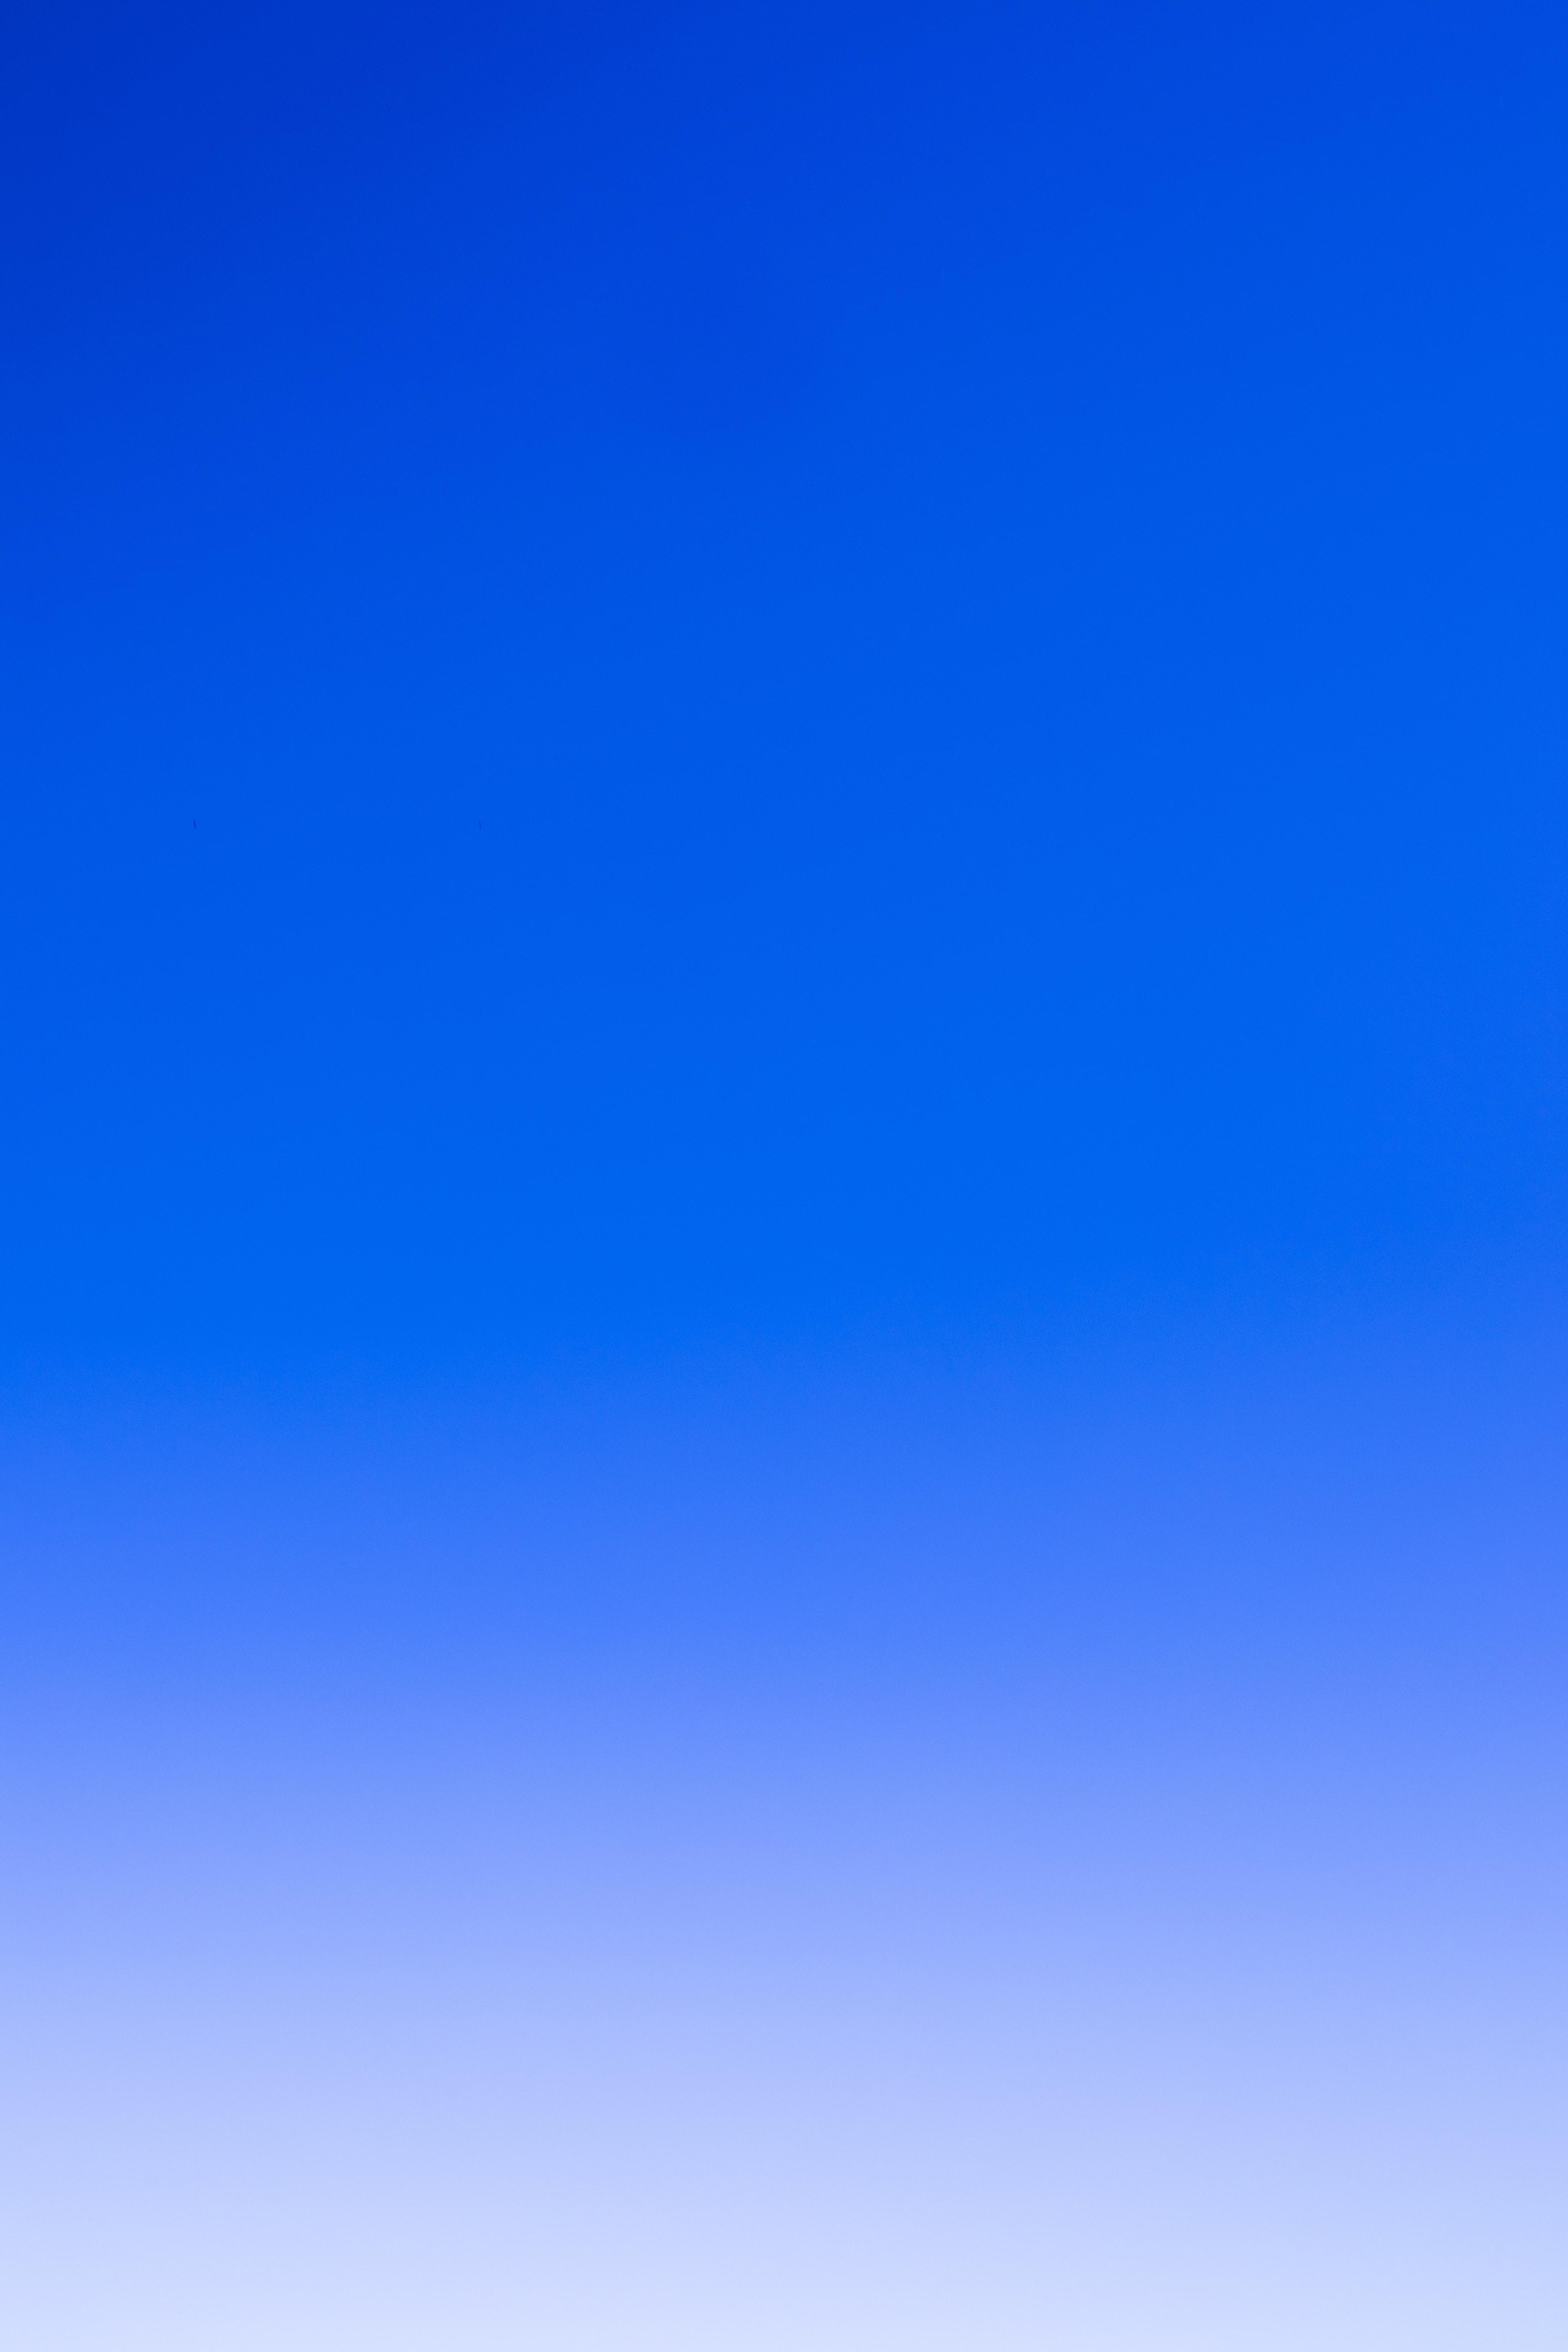 Download wallpaper 4480x6720 sky, blue, color, background hd background